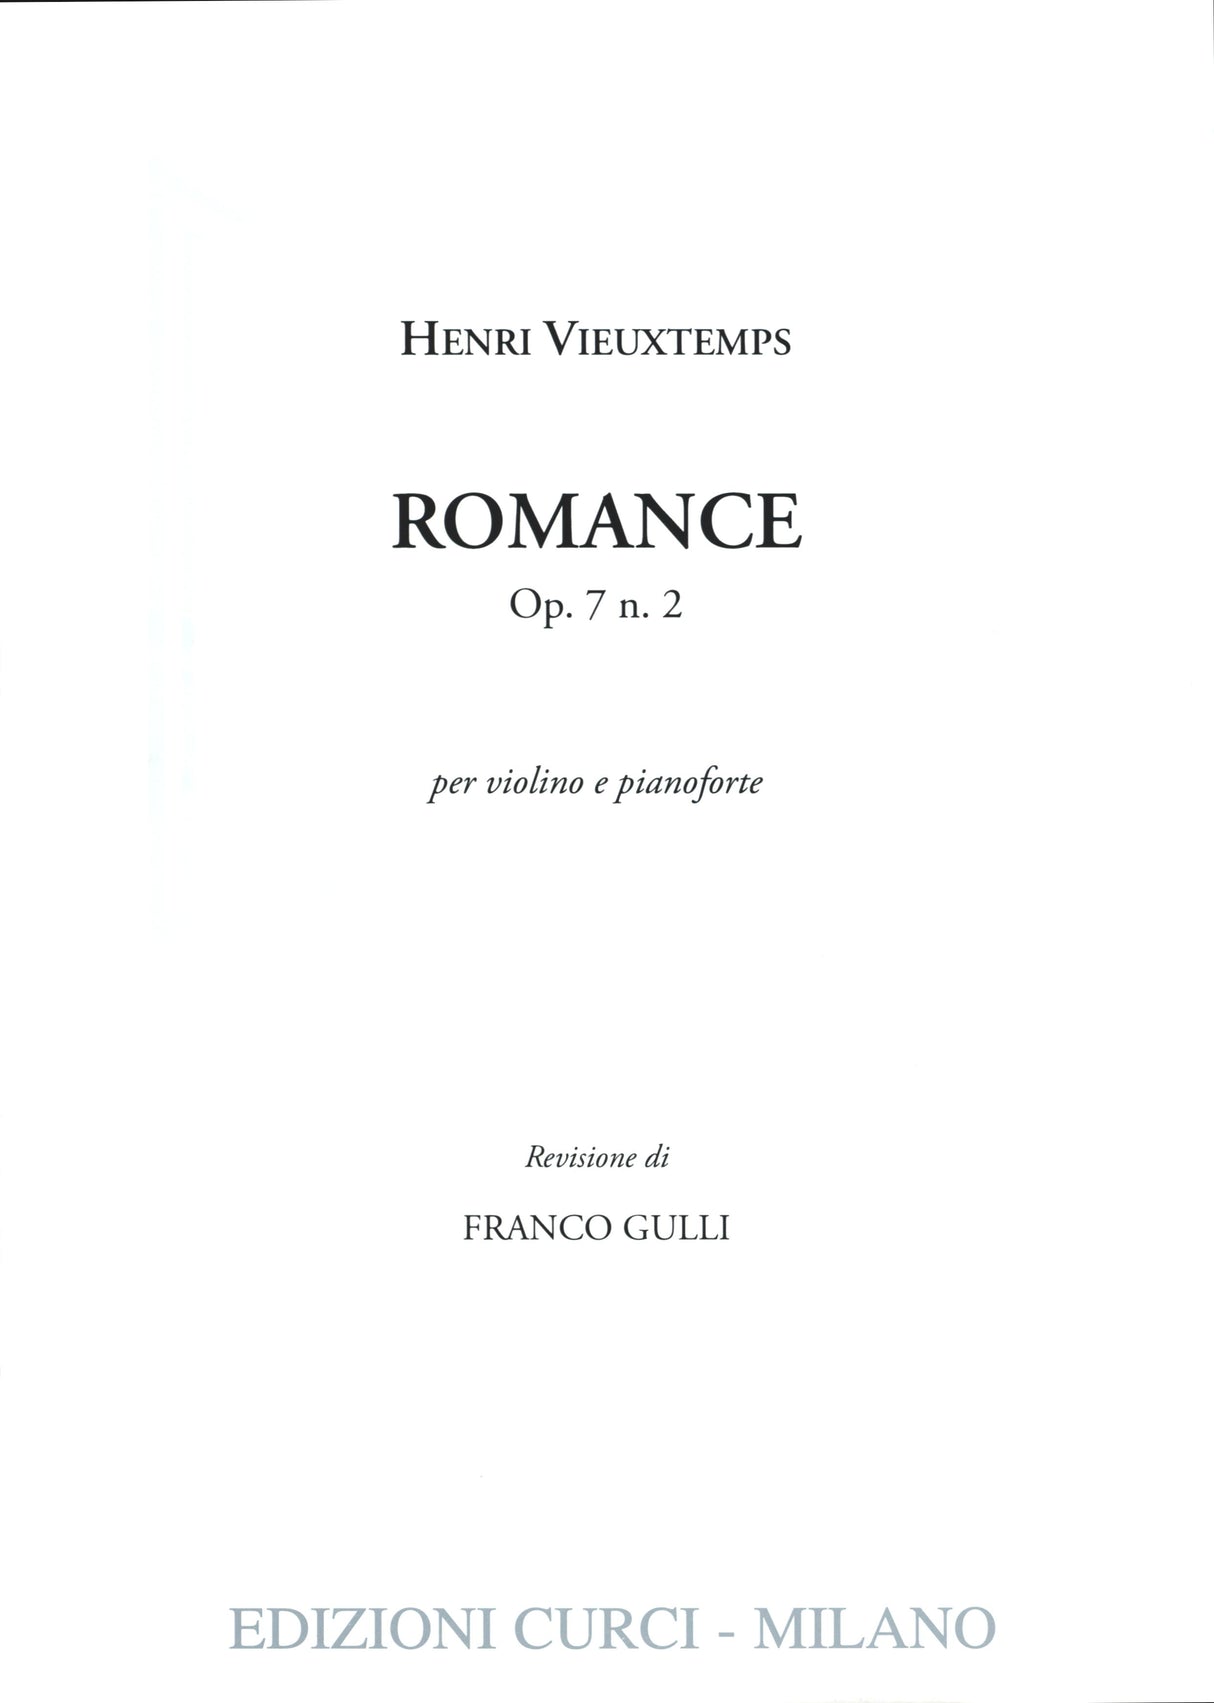 Vieuxtemps: Romance, Op. 7, No. 2